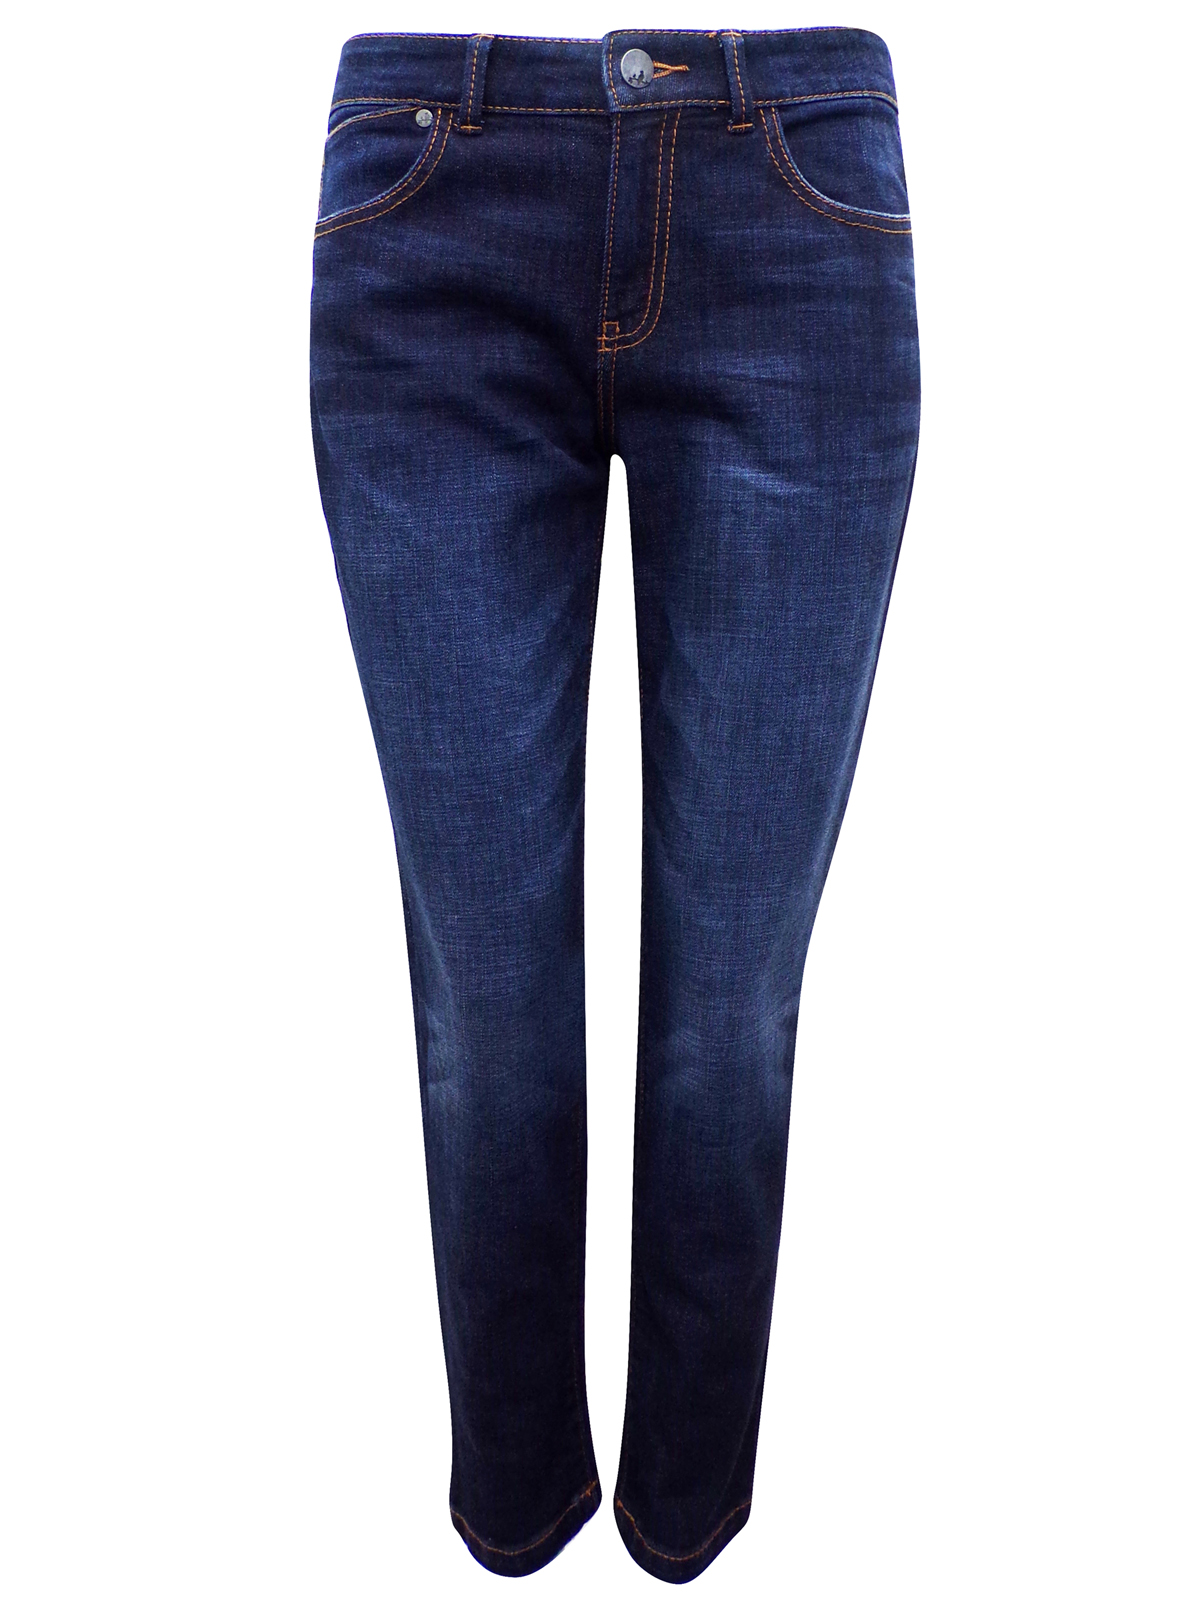 Marks and Spencer - - M&5 INDIGO Straight Leg Denim Jeans - Size 6 to 20